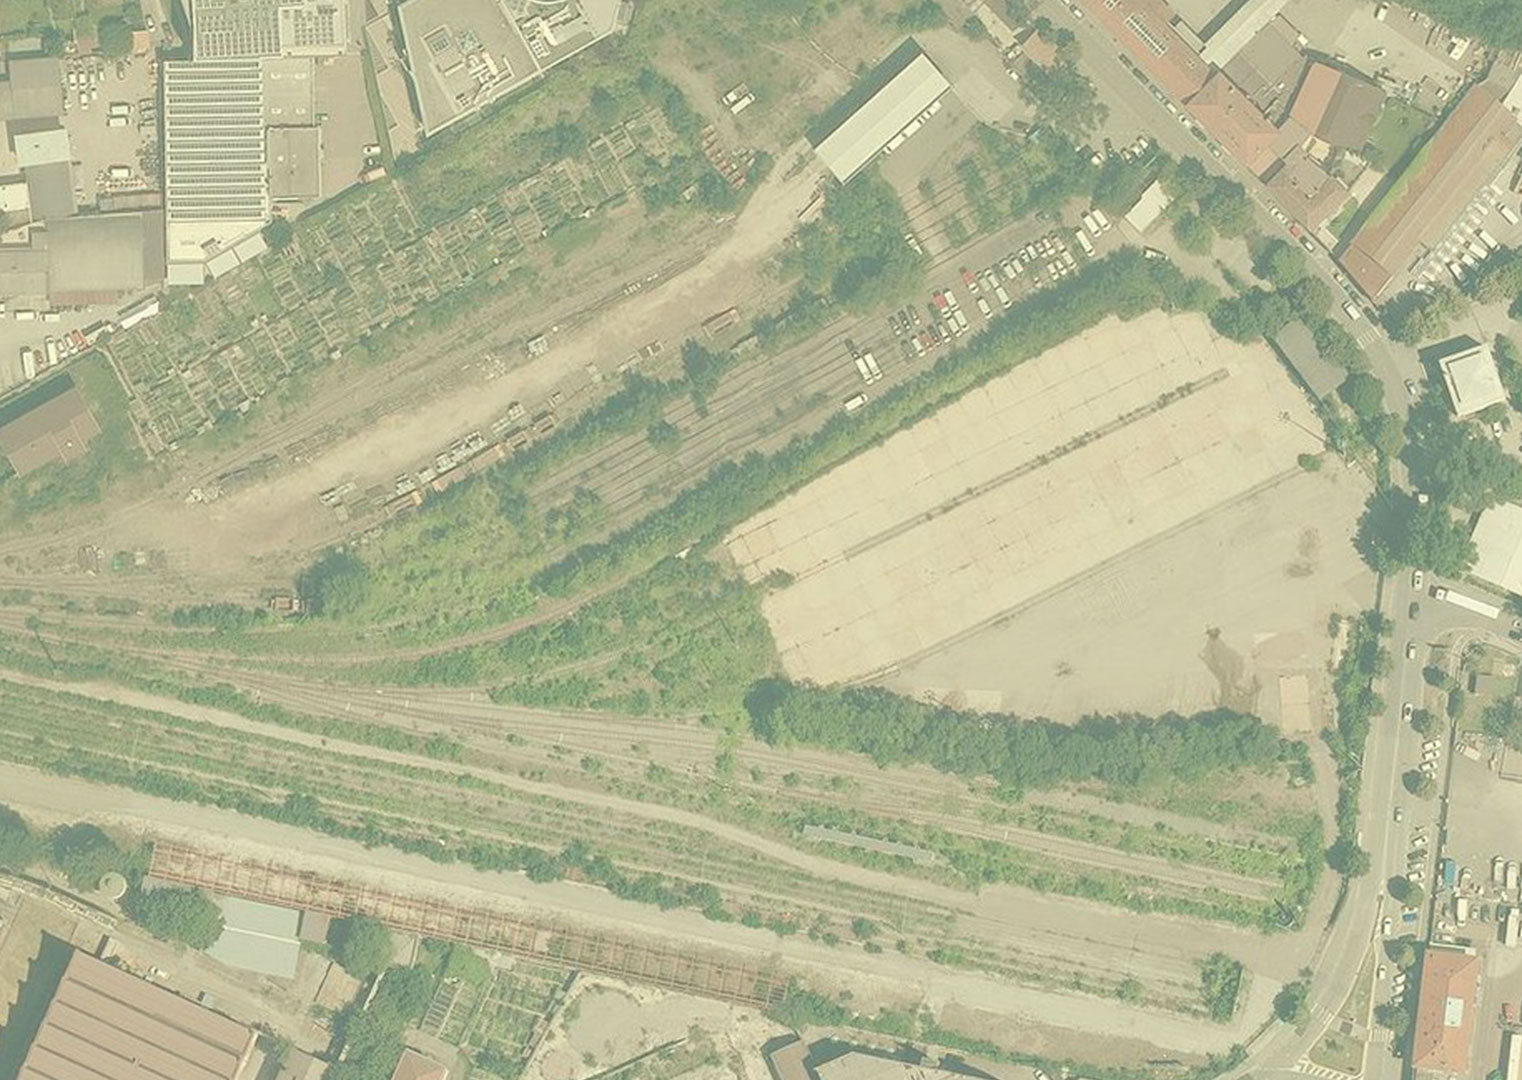 satelite image of the area 2020 http://geokatalog.buergernetz.bz.it/geokatalog/